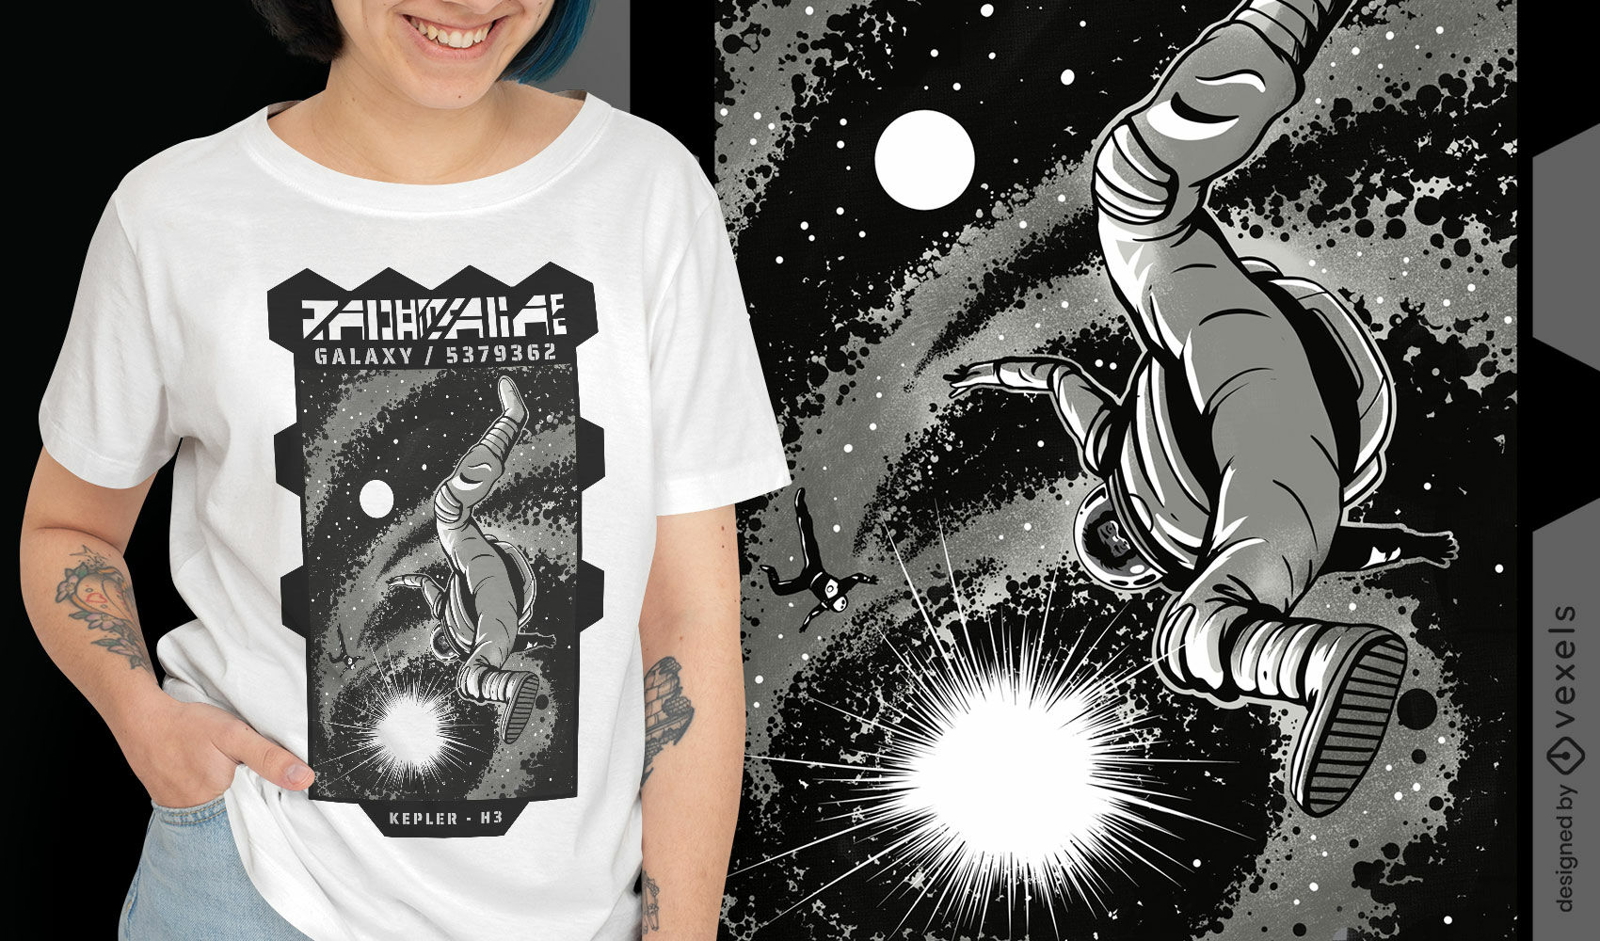 Falling in space t-shirt design